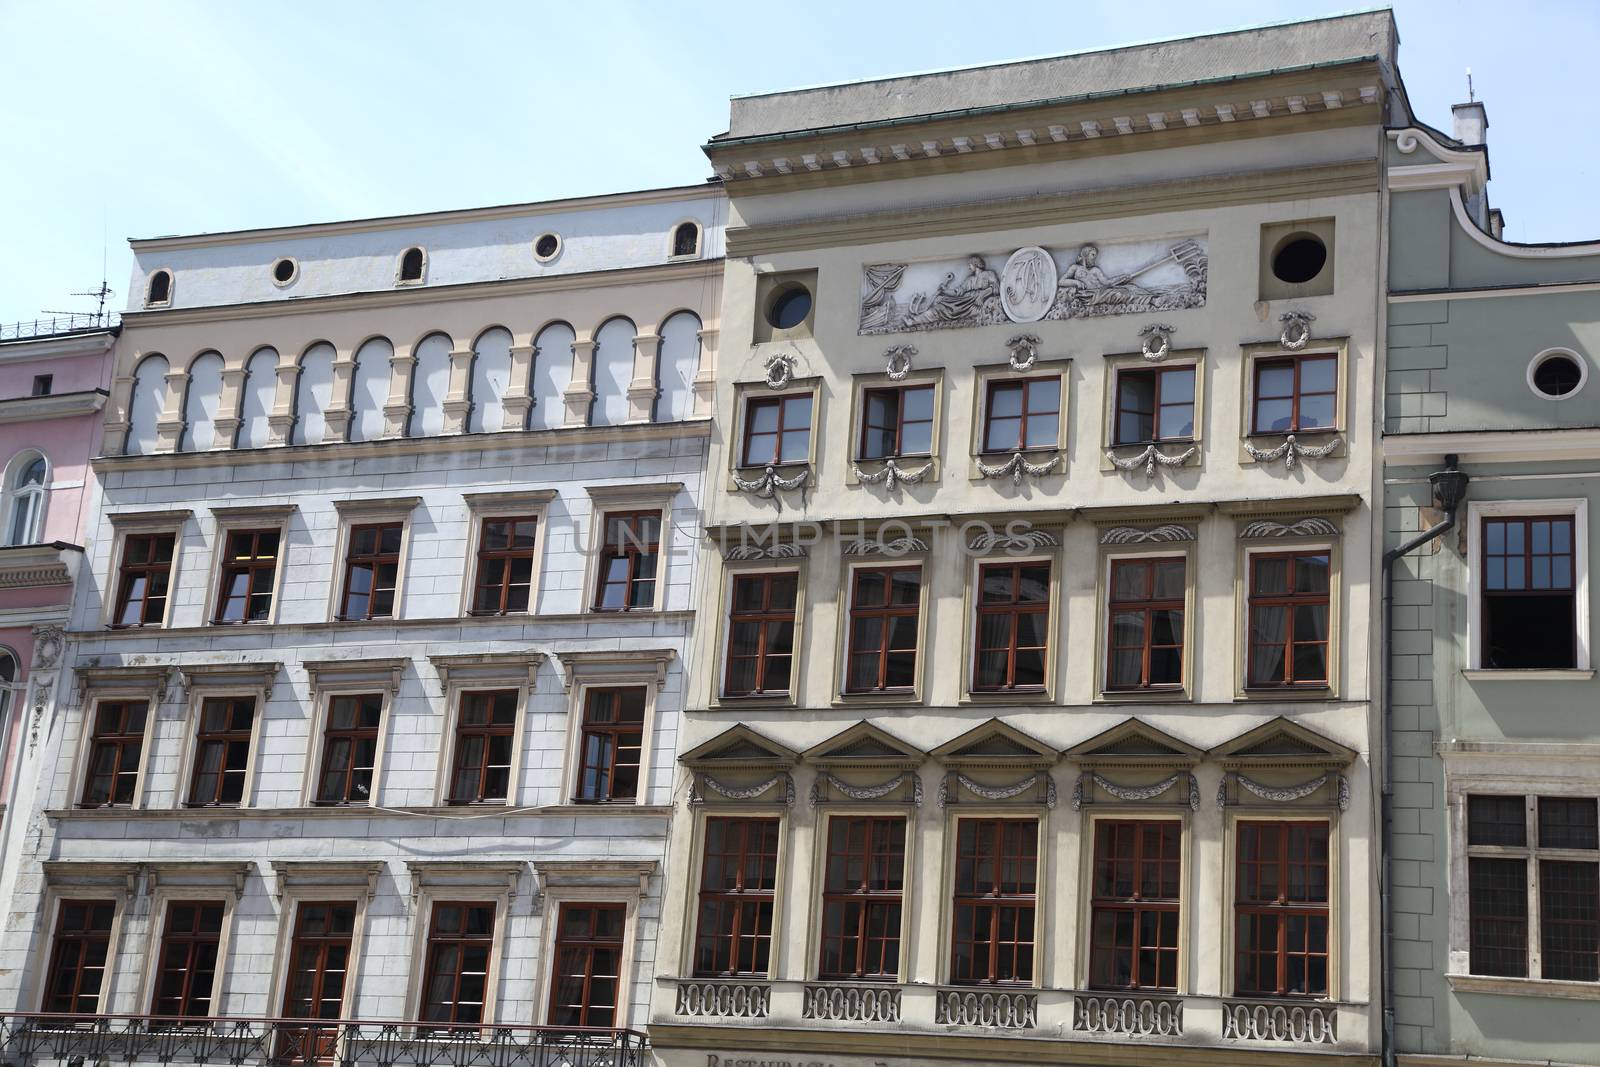  old building in Krakow by sagasan